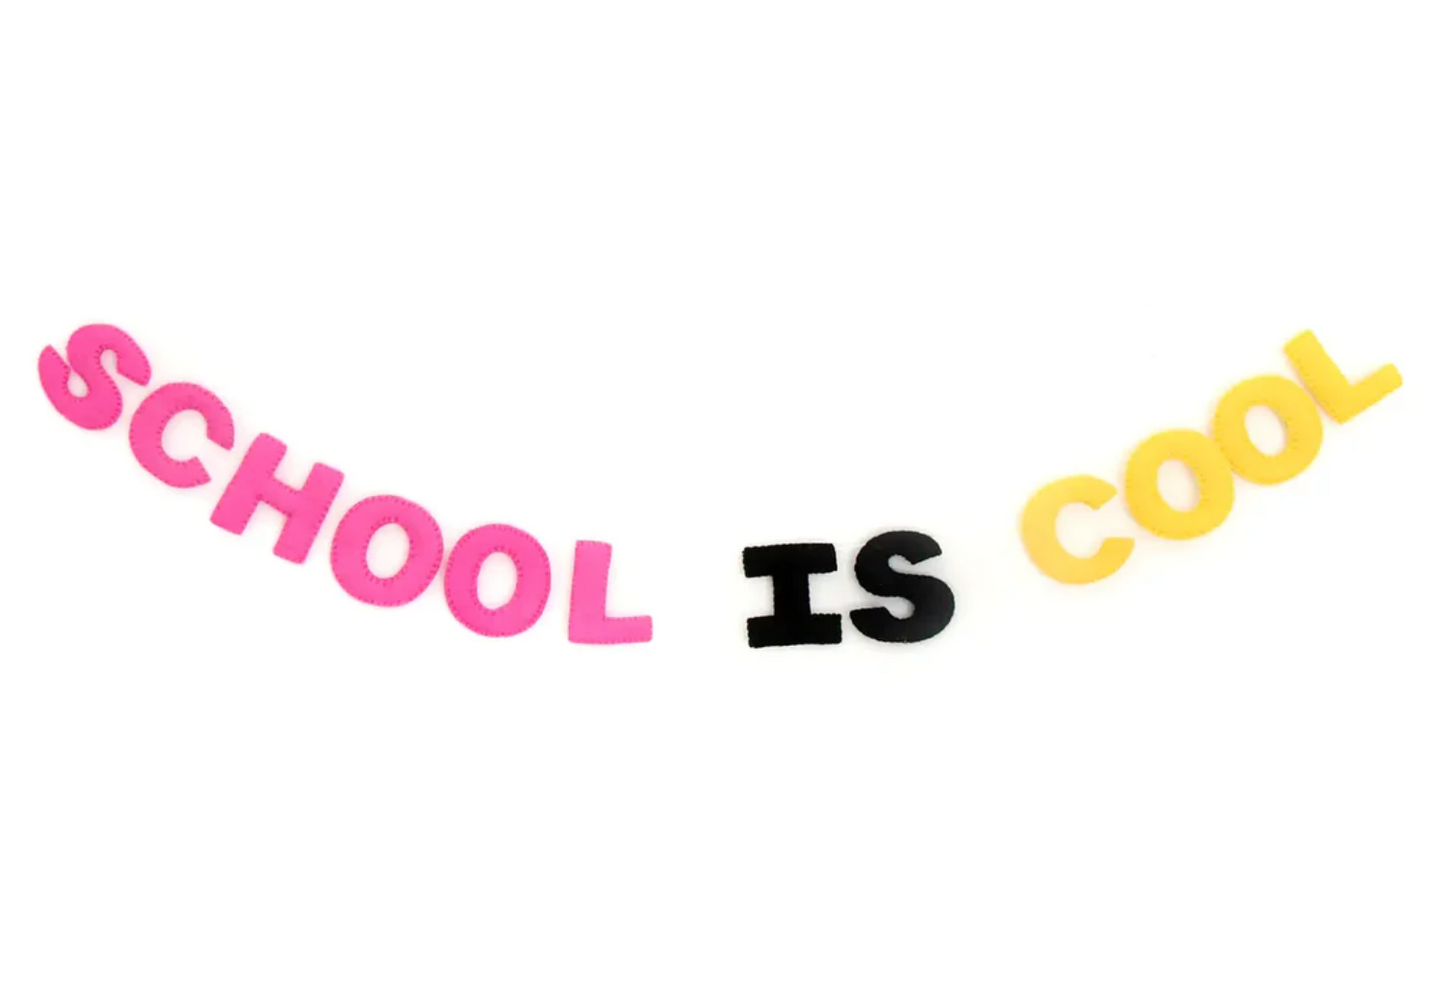 “School is Cool” Felt Garland